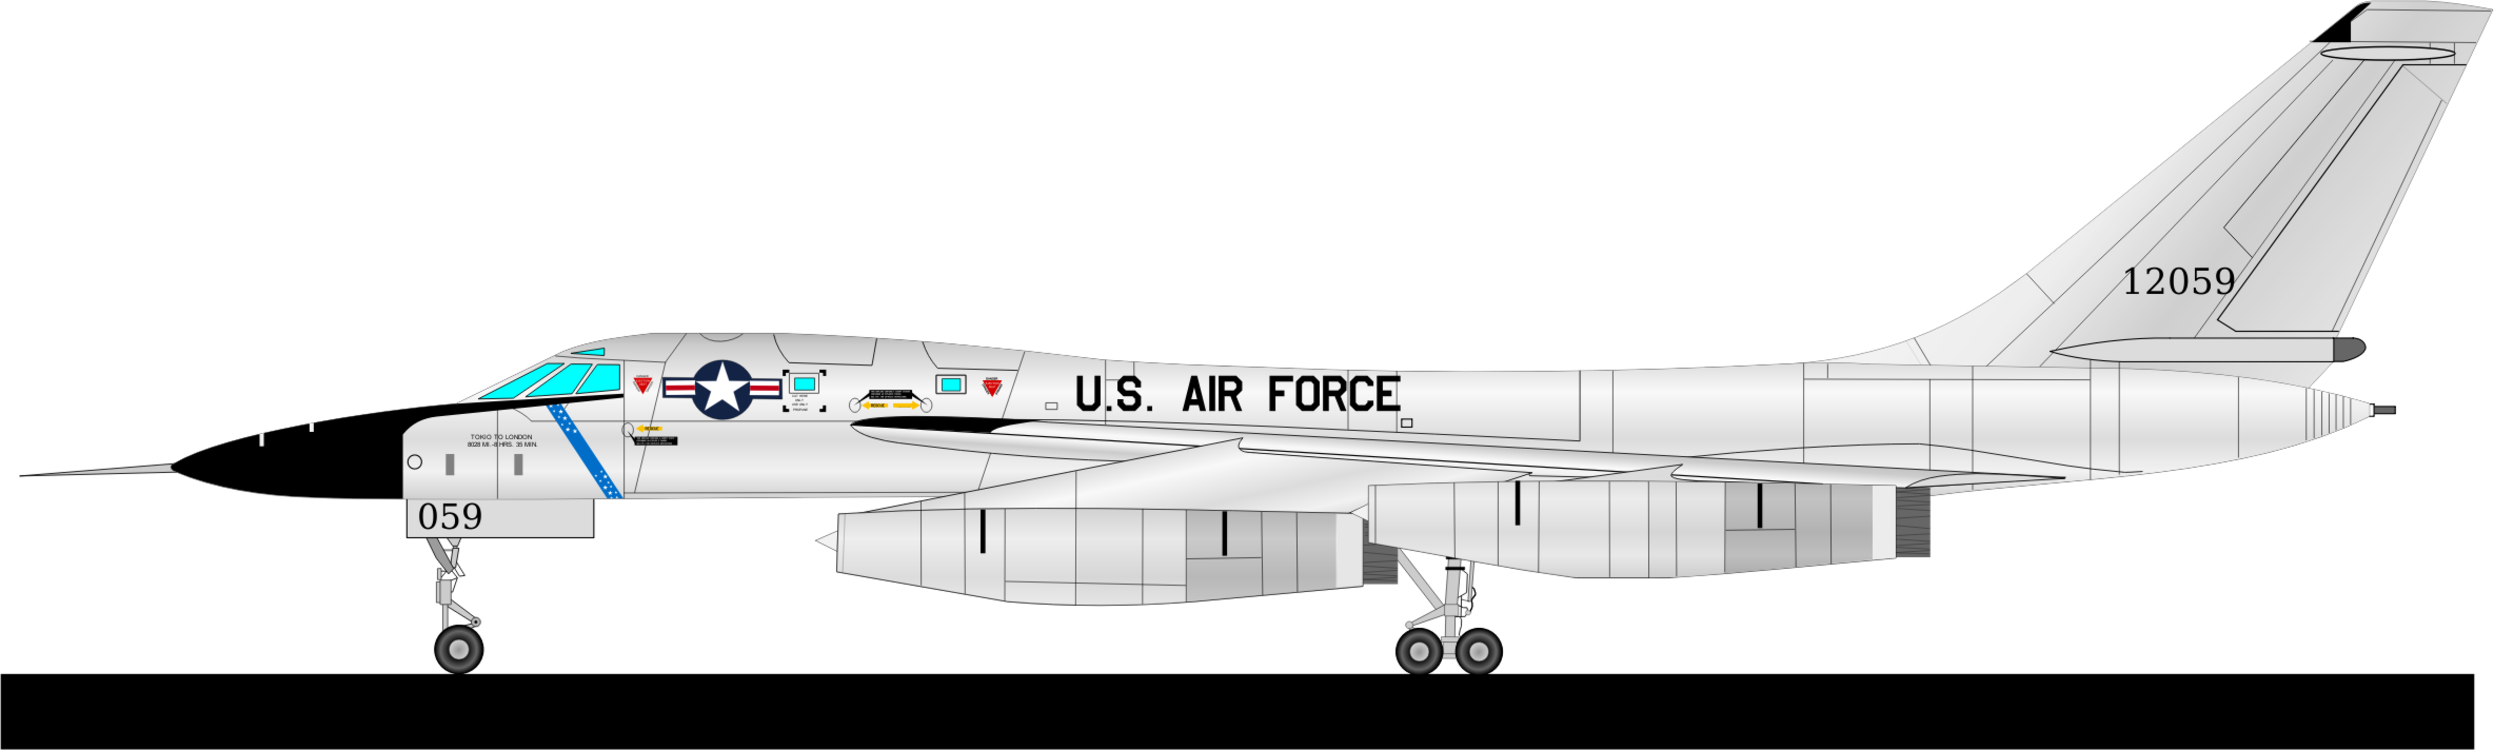 Supersonic Aircraft,Air Force,Jet Aircraft